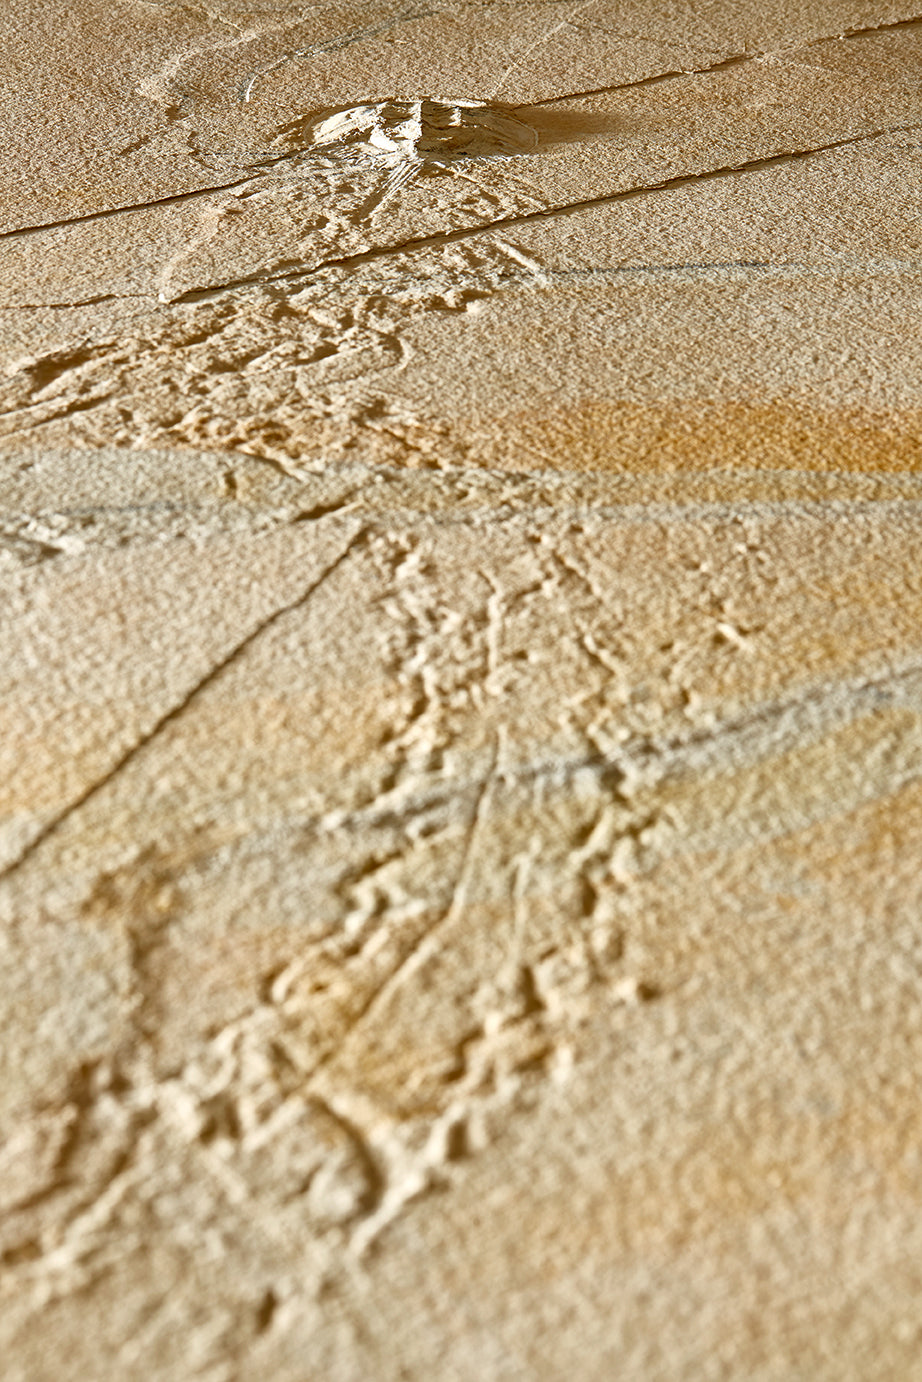 "A" grade | Horseshoe crab and tracks | Mesolimulus walchi | Museum quality